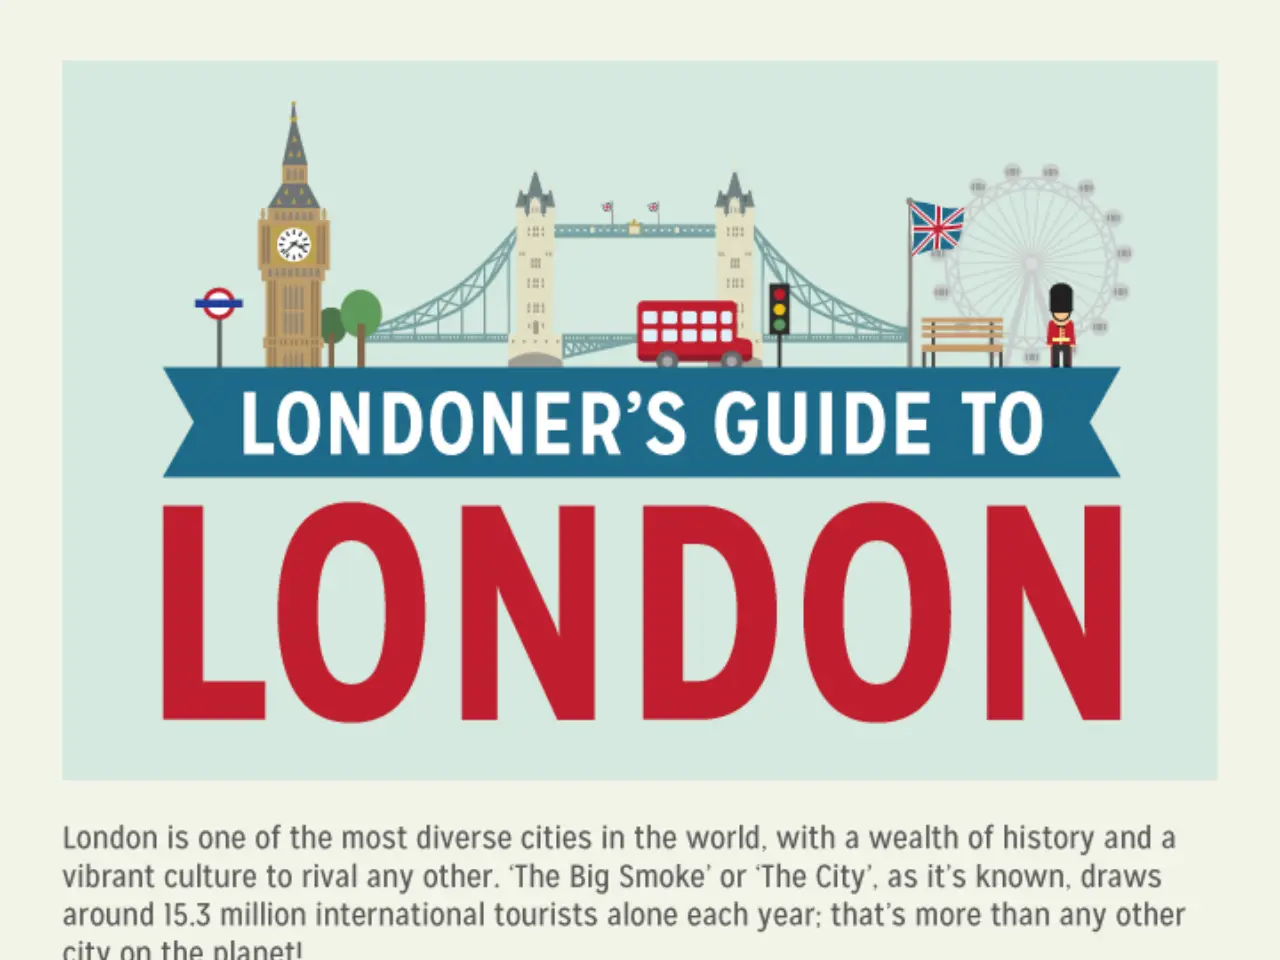 Facts On Londoner’s Guide Timeline